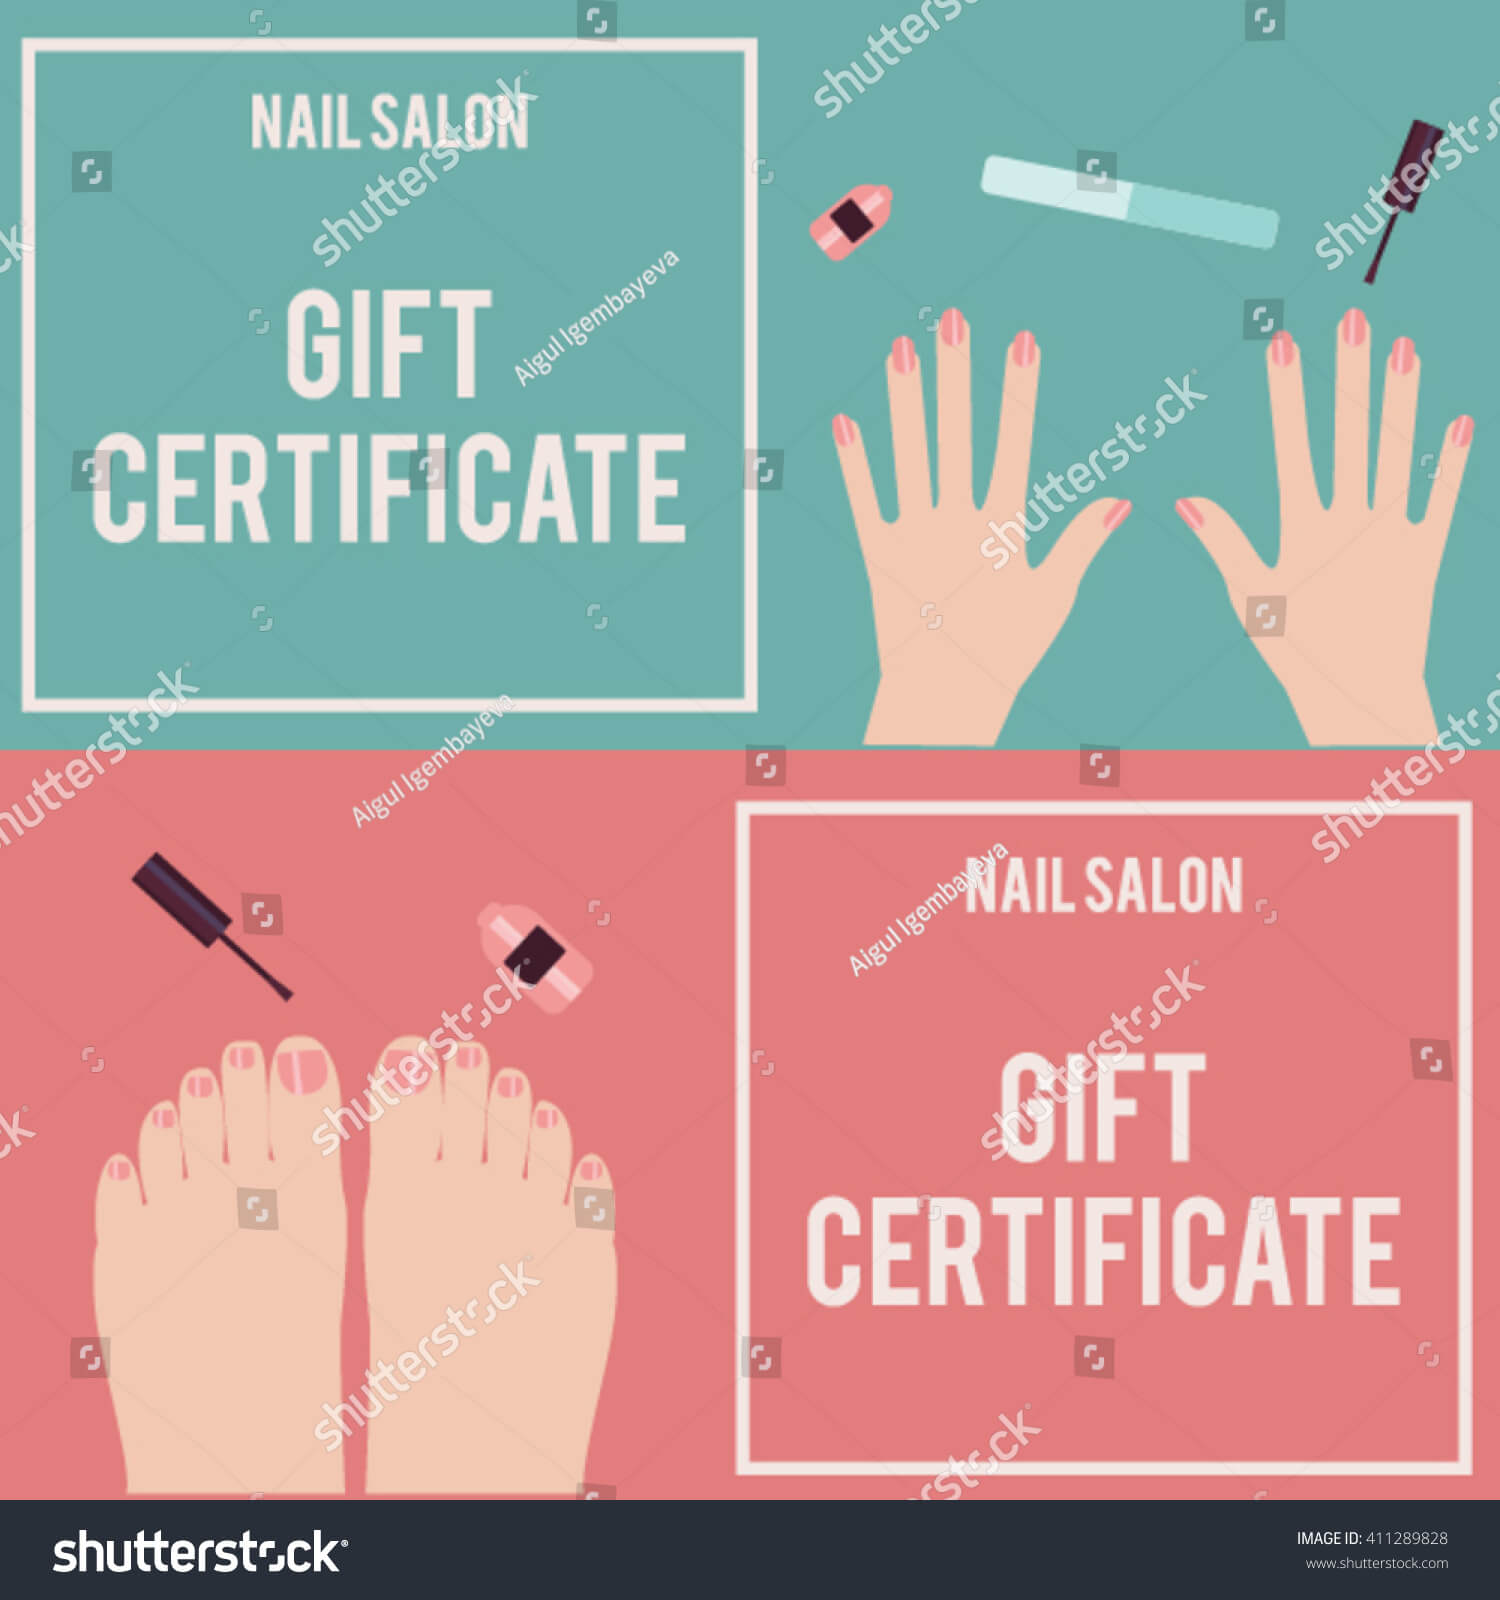 Nail Salon Gift Certificate Gift Certificate Stock Vector With Nail Gift Certificate Template Free